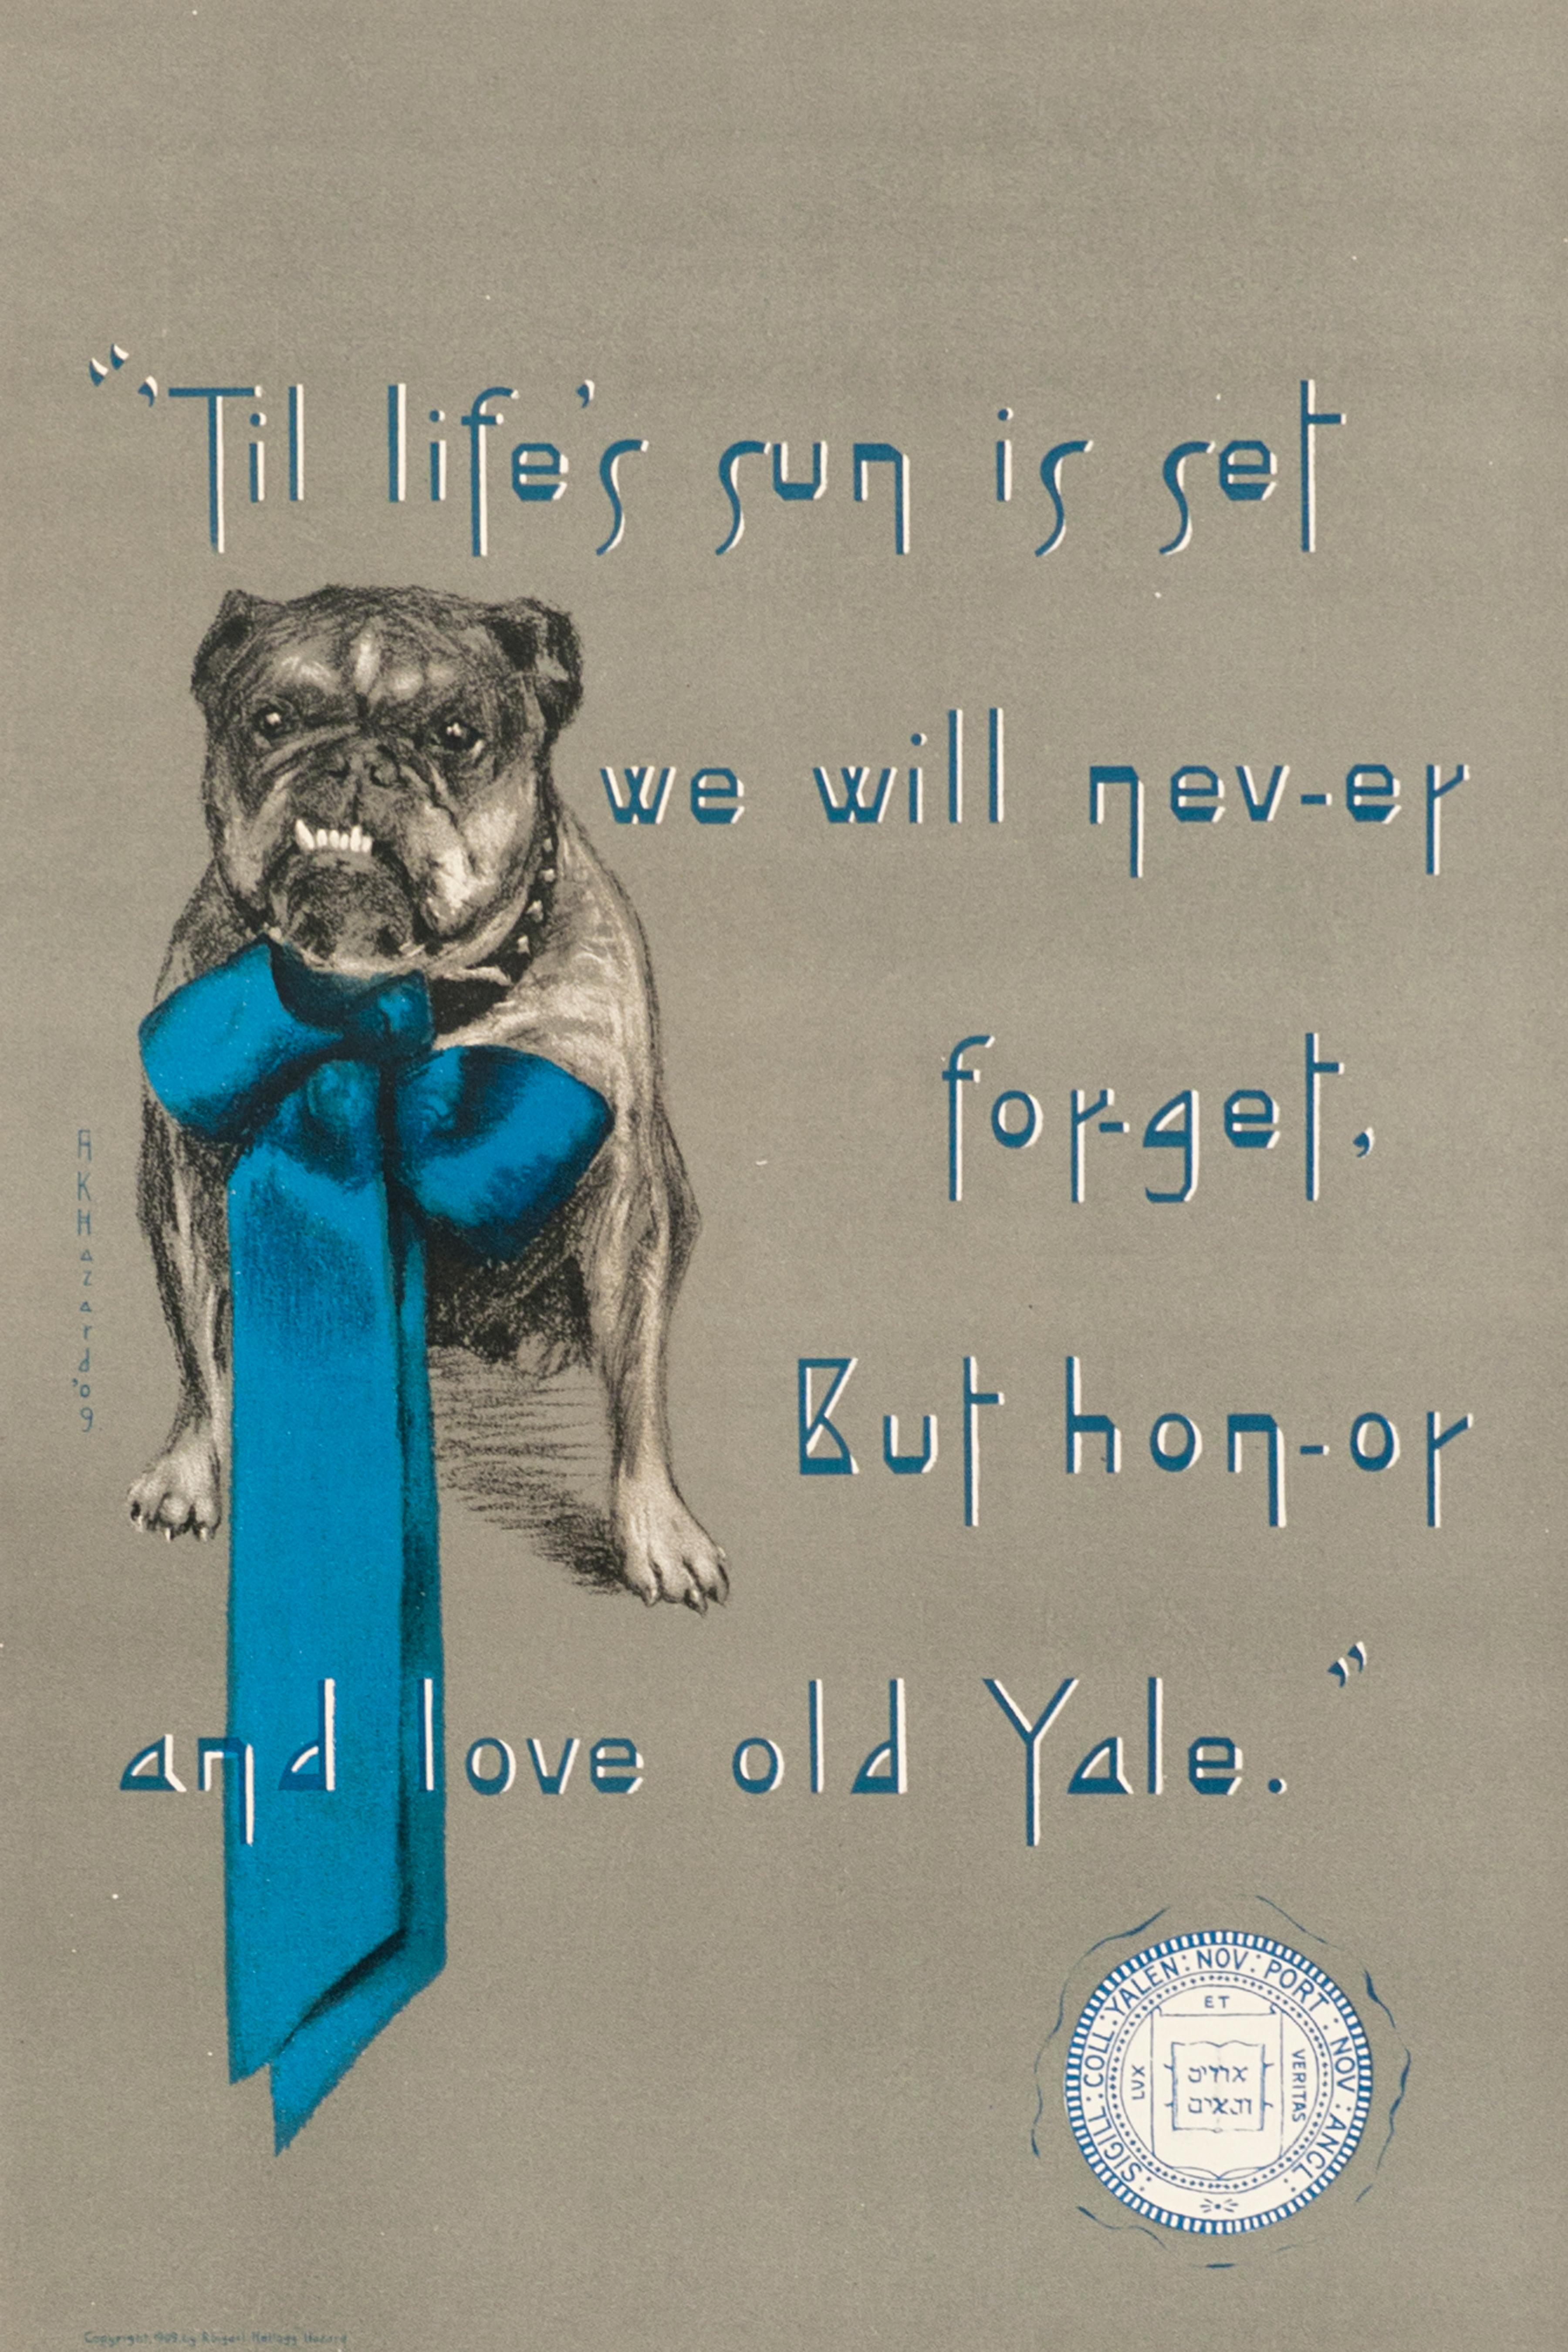 Abigail Kellogg Hazard Animal Print - "Til Life's sun is set..." Original Vintage 1909 Yale Bulldog Poster